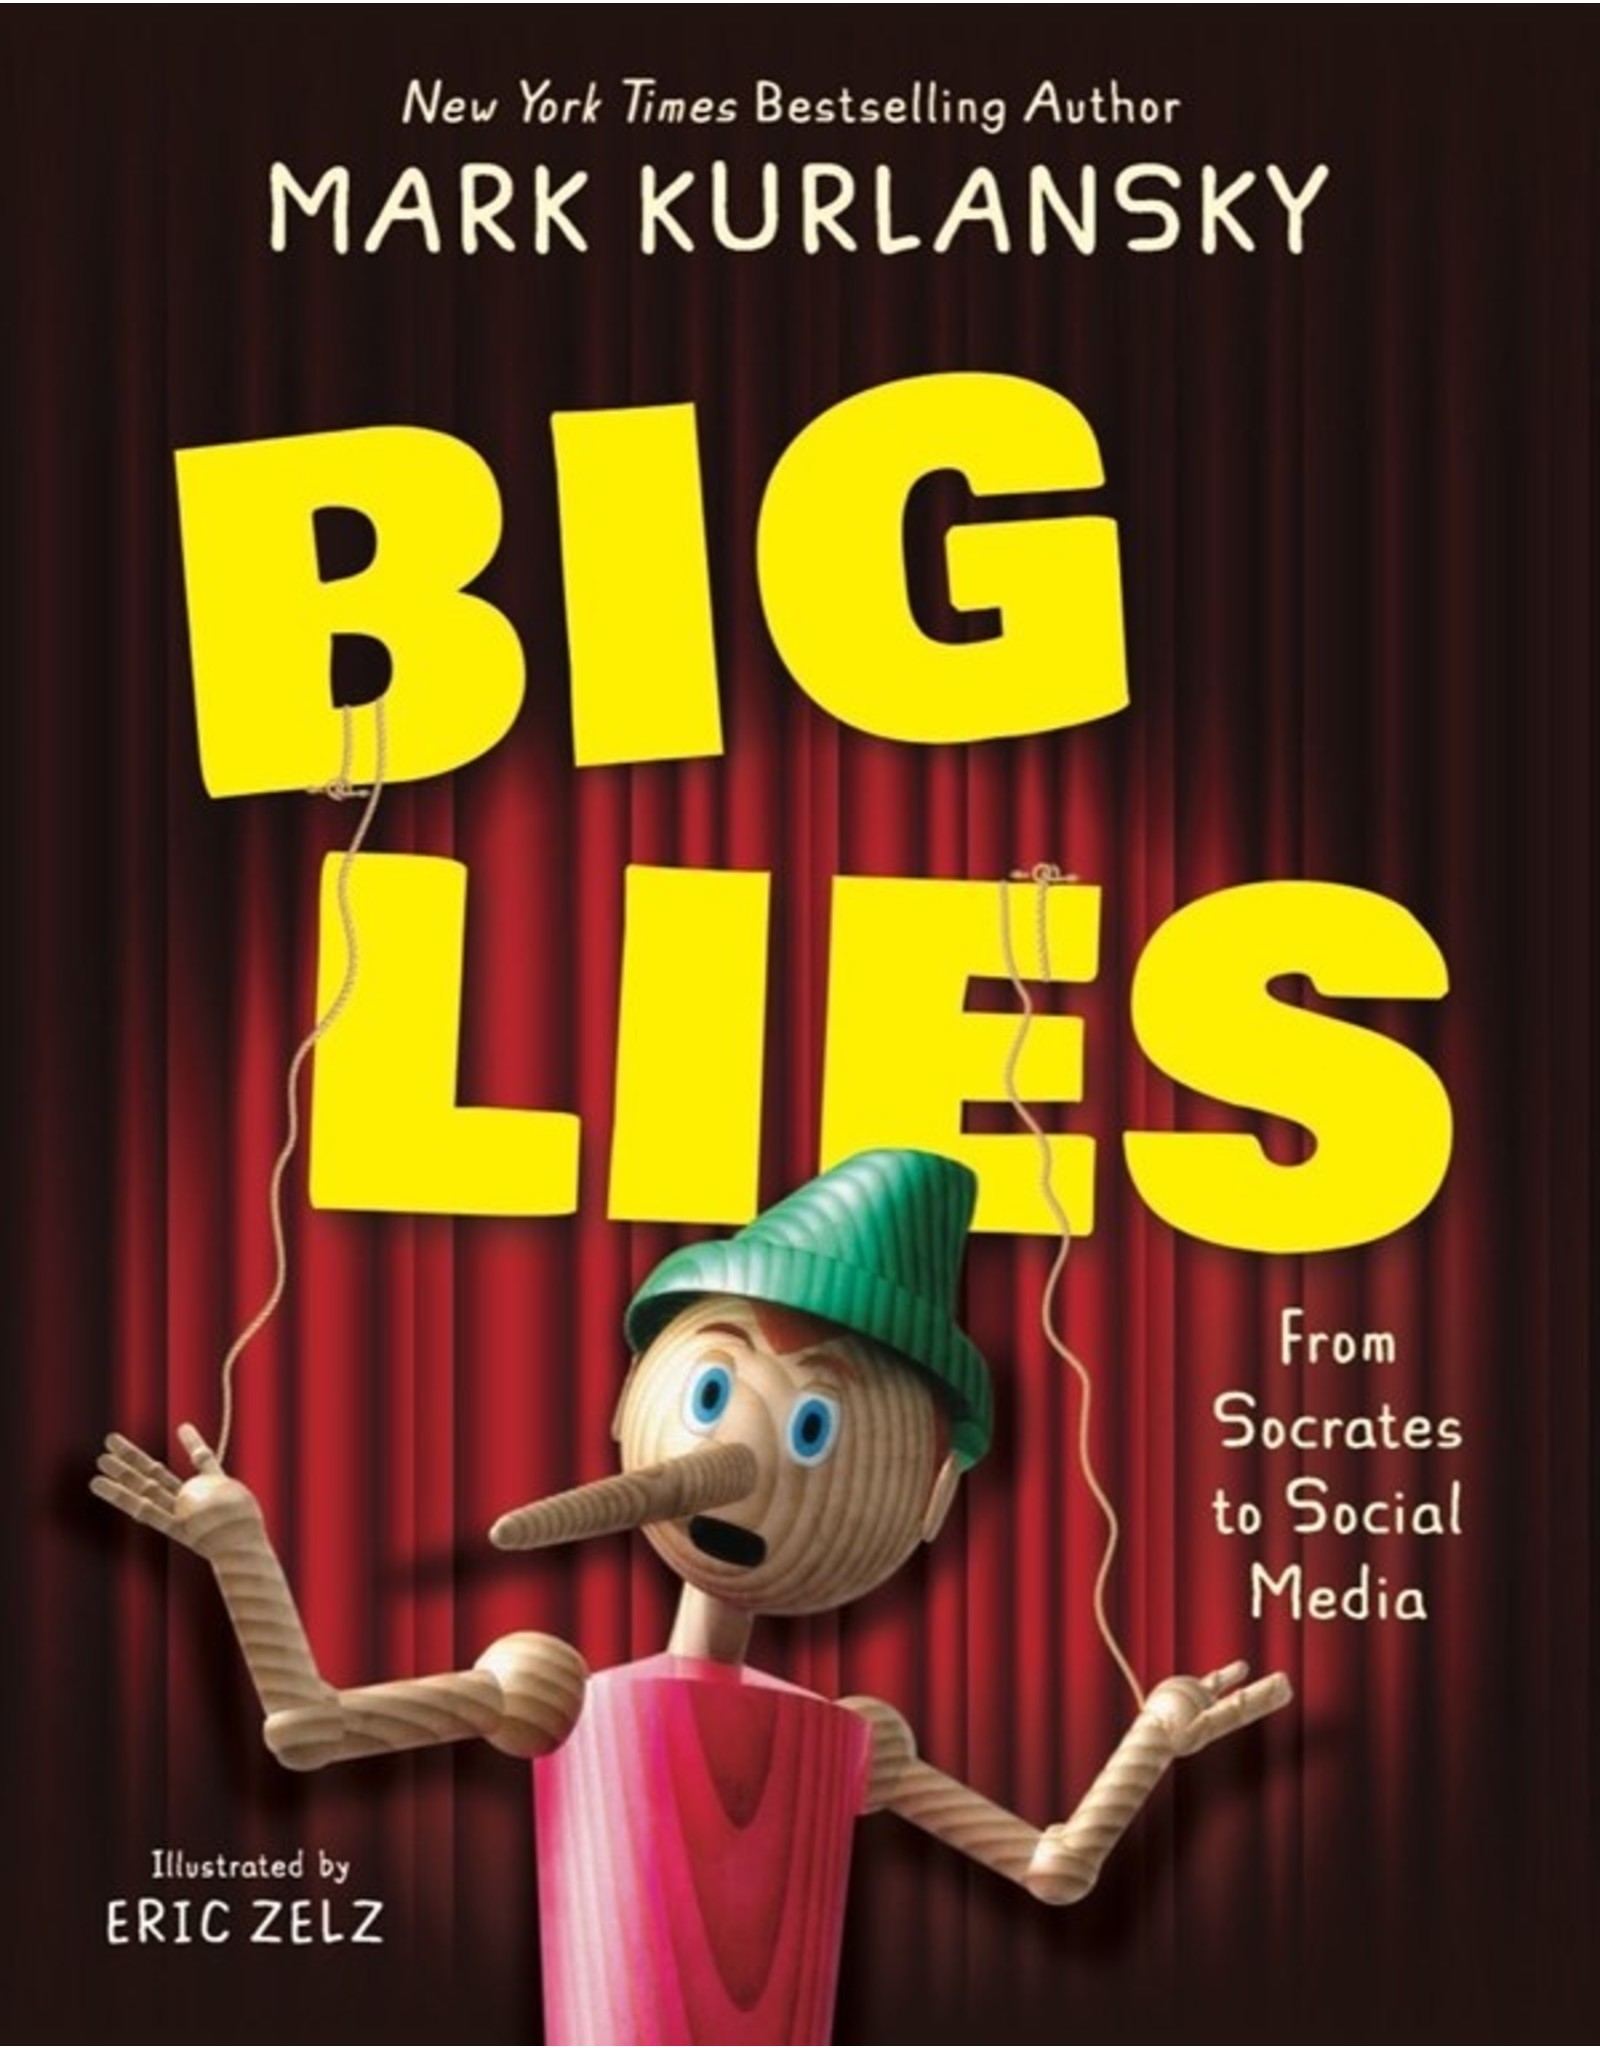 Books Big Lies by Mark Kurlansky